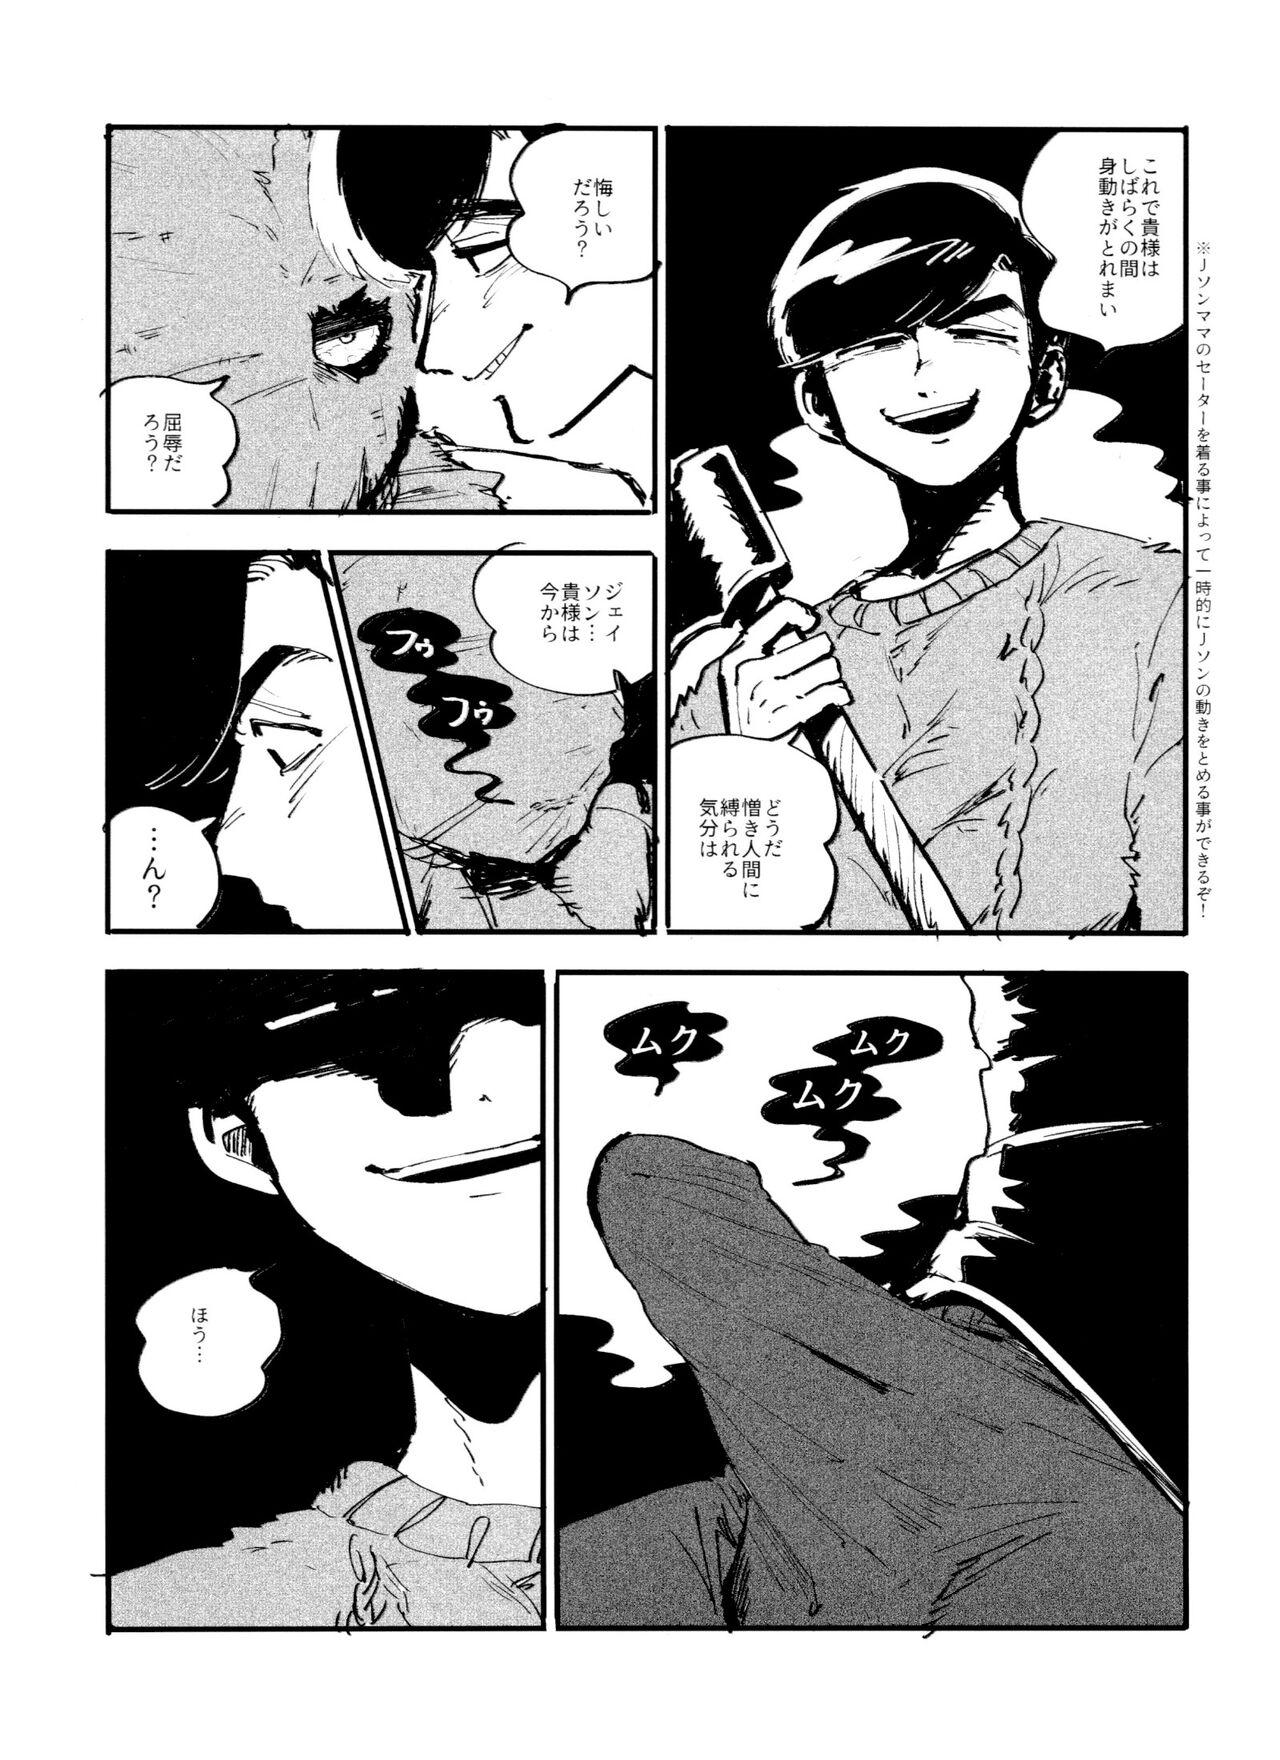 Vintage JSONKILL - Osomatsu san Mamando - Page 3